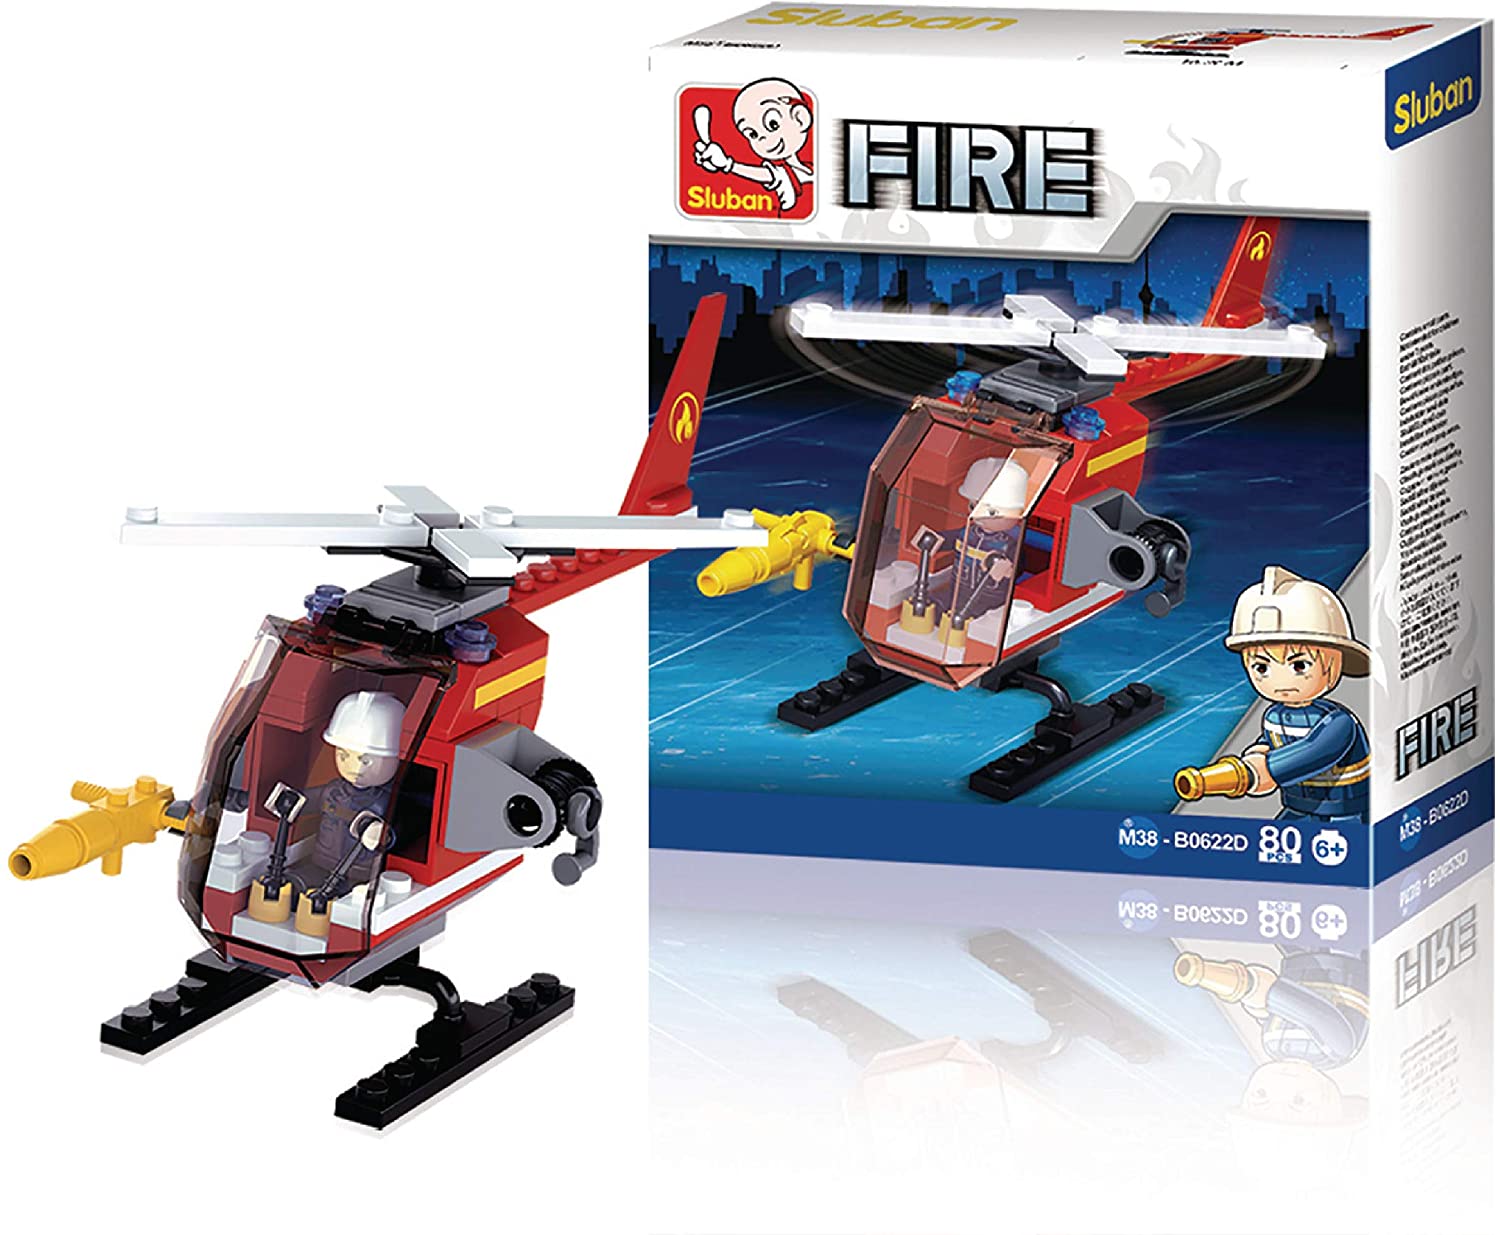 Sluban Building Blocks Fire Series Helicopter [M38 B0622D]